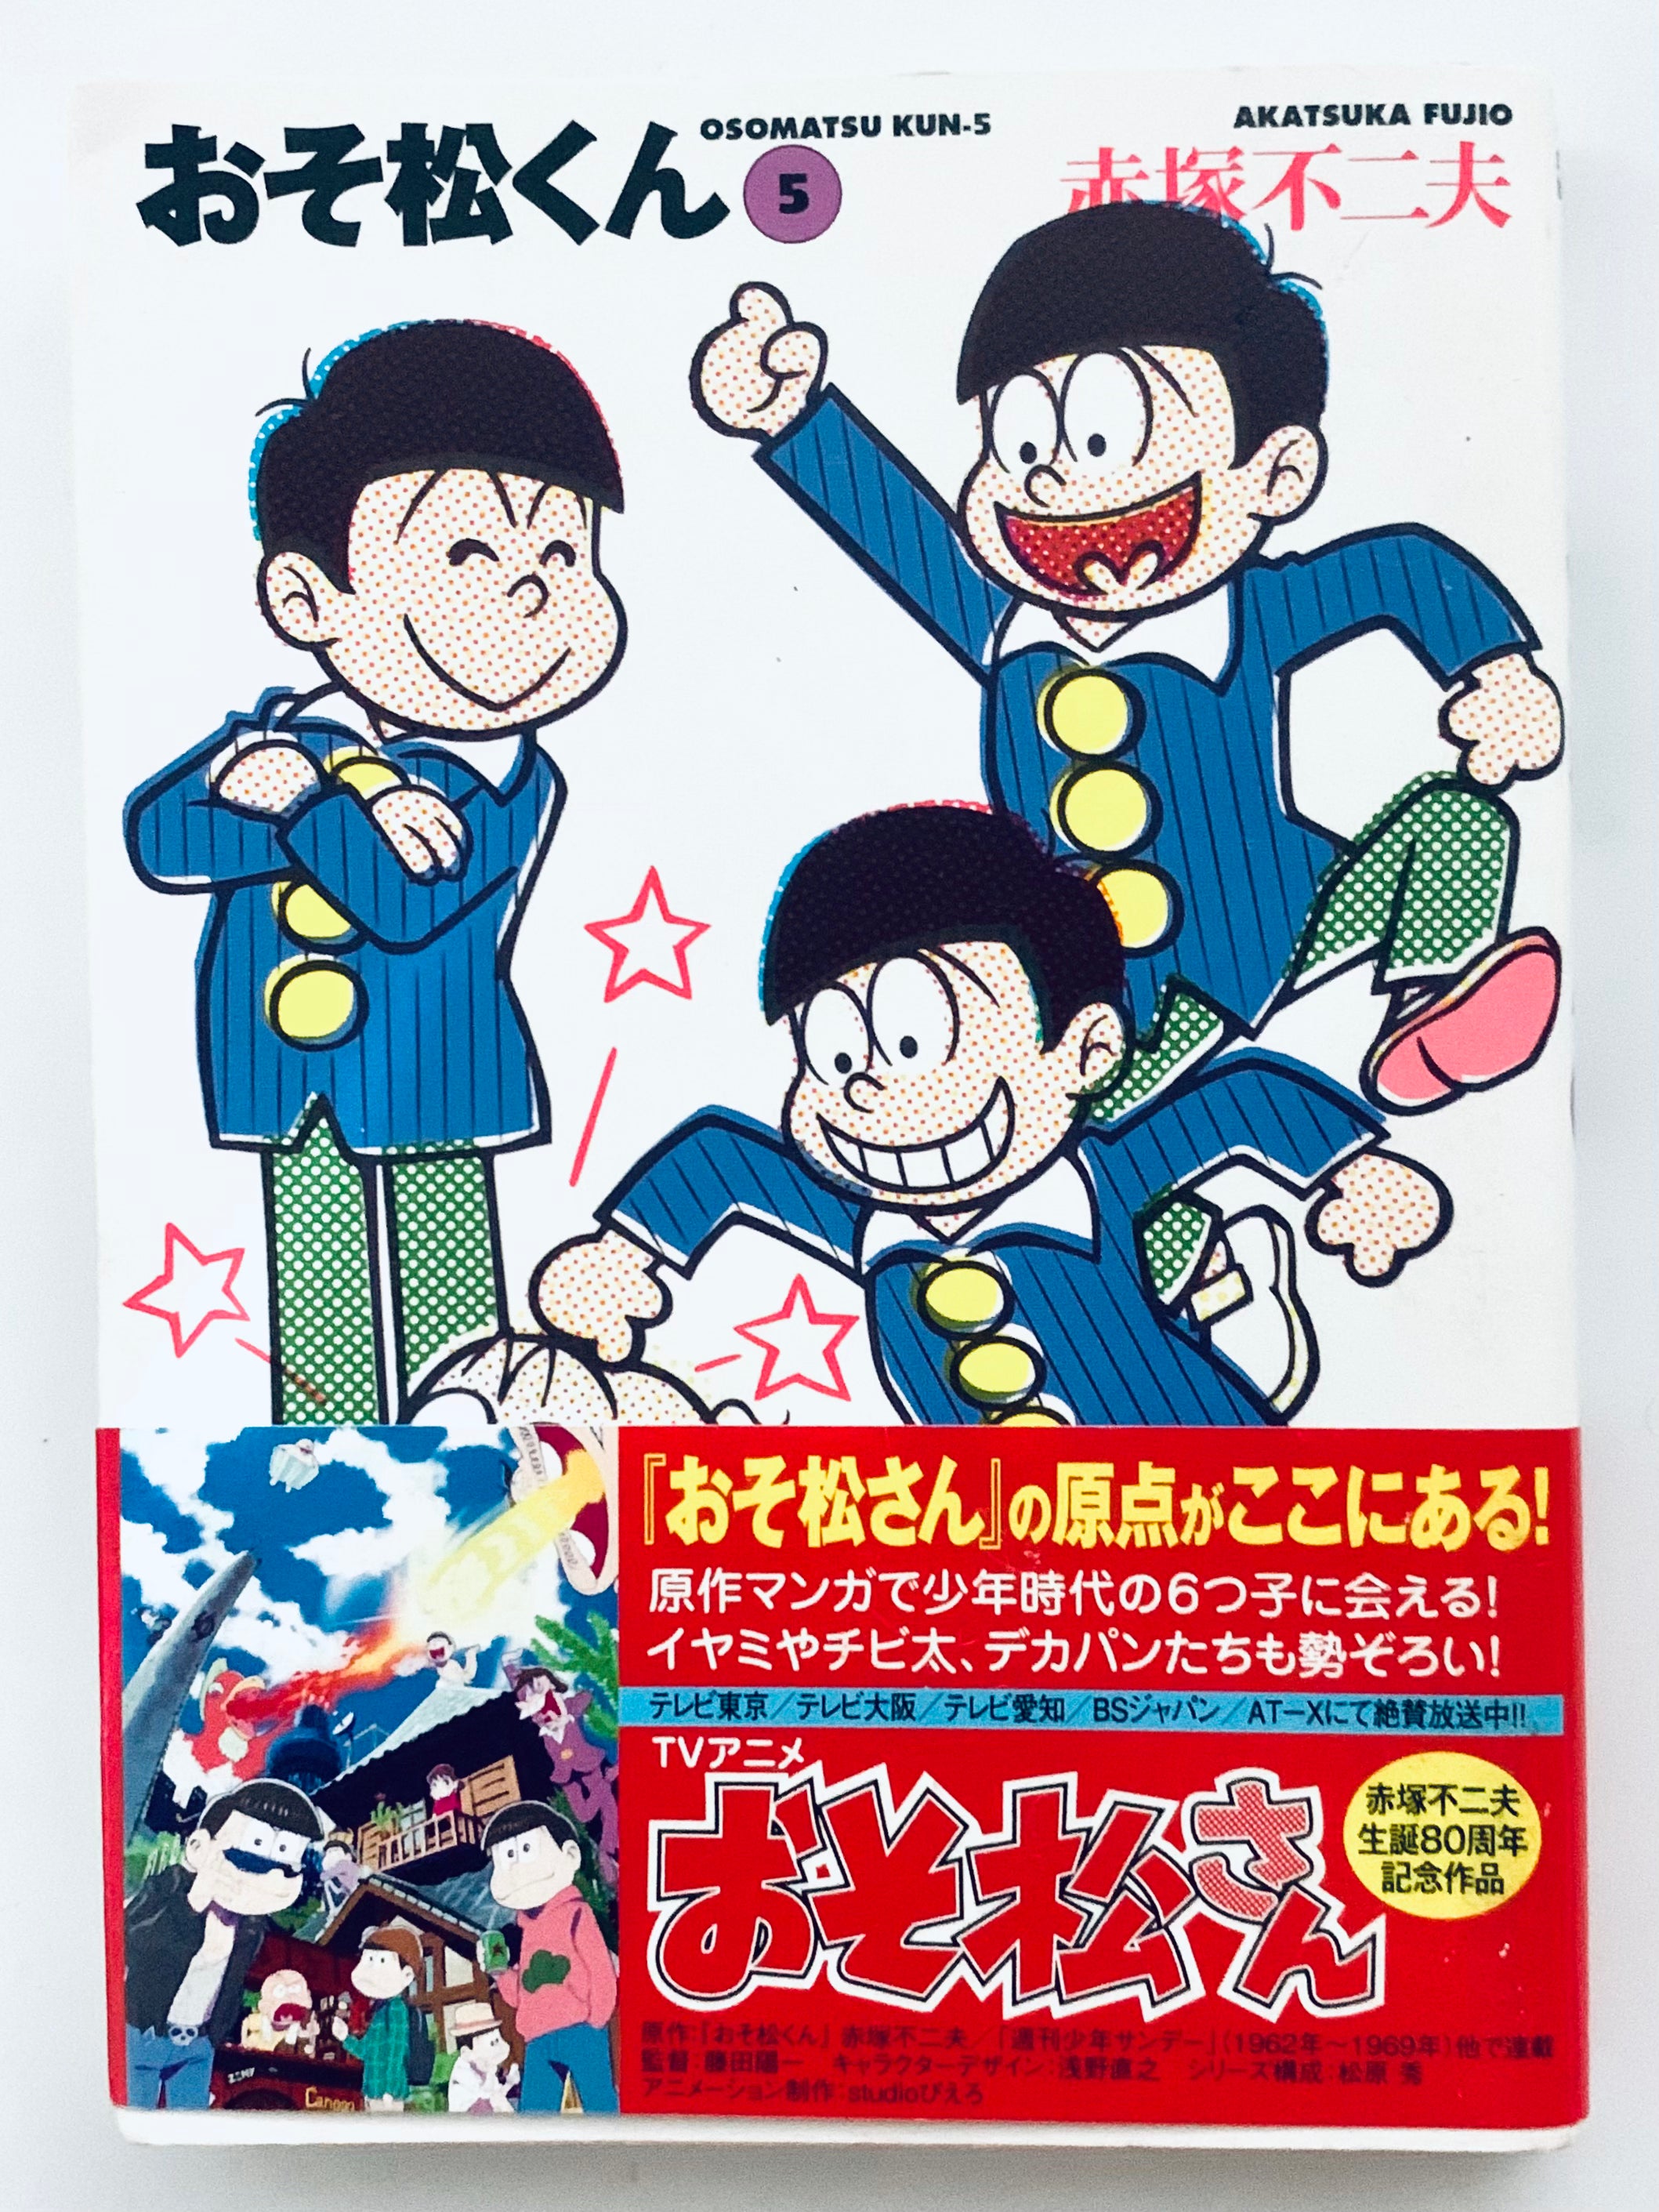 Mikakunin-de-Shinkoukei (Language:Japanese) Manga Comic From Japan